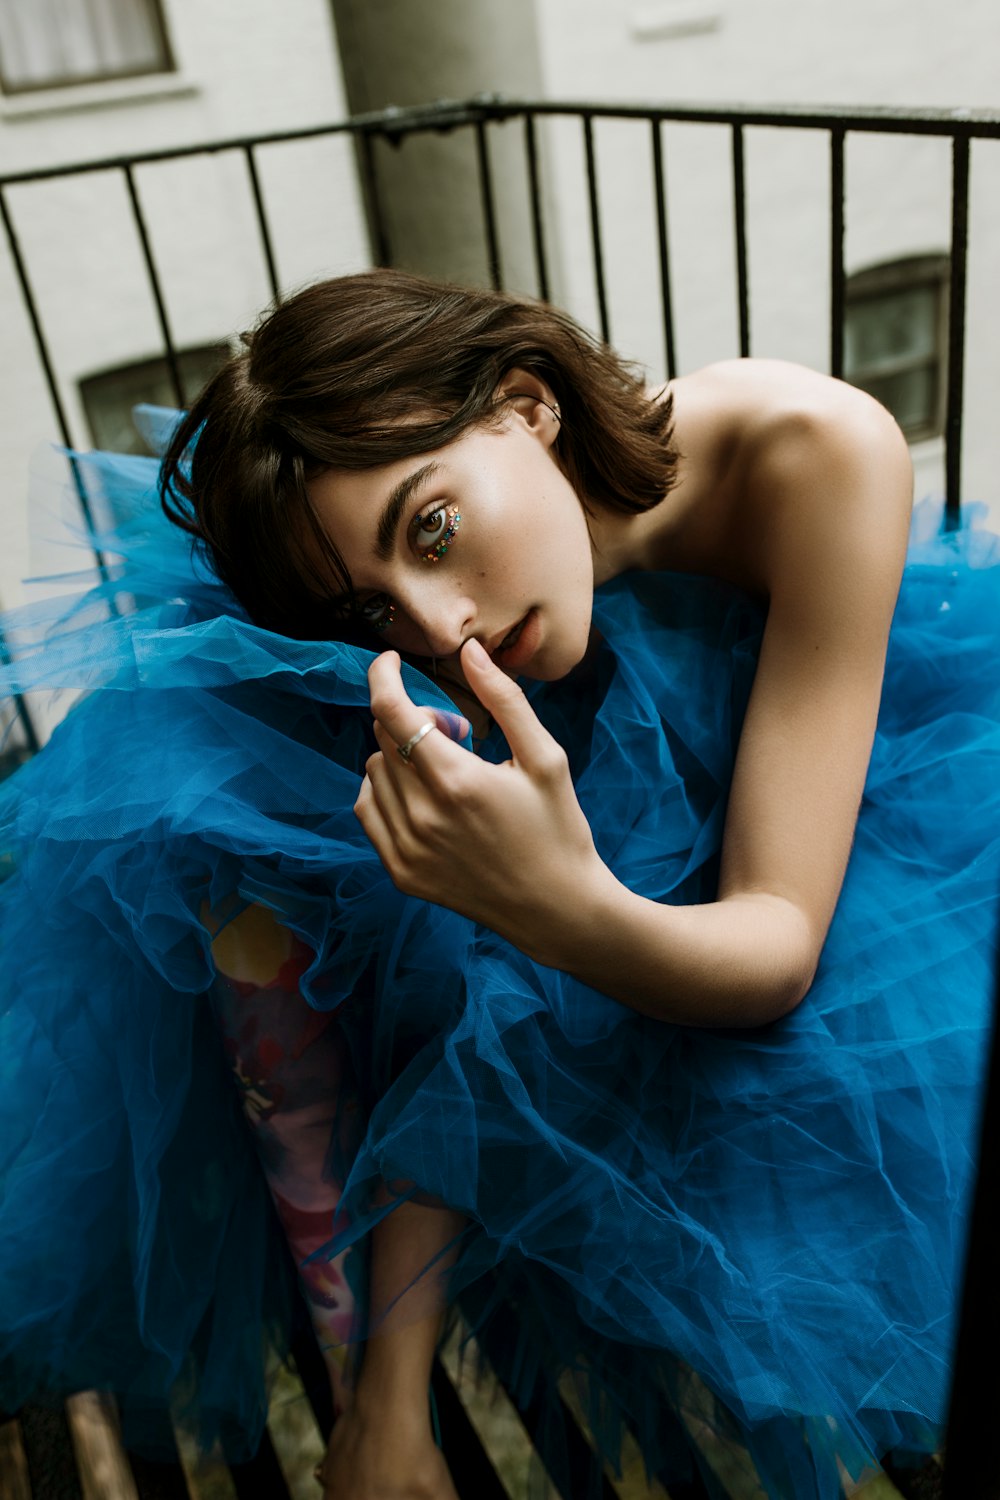 Femme en robe tube bleue allongée sur textile bleu